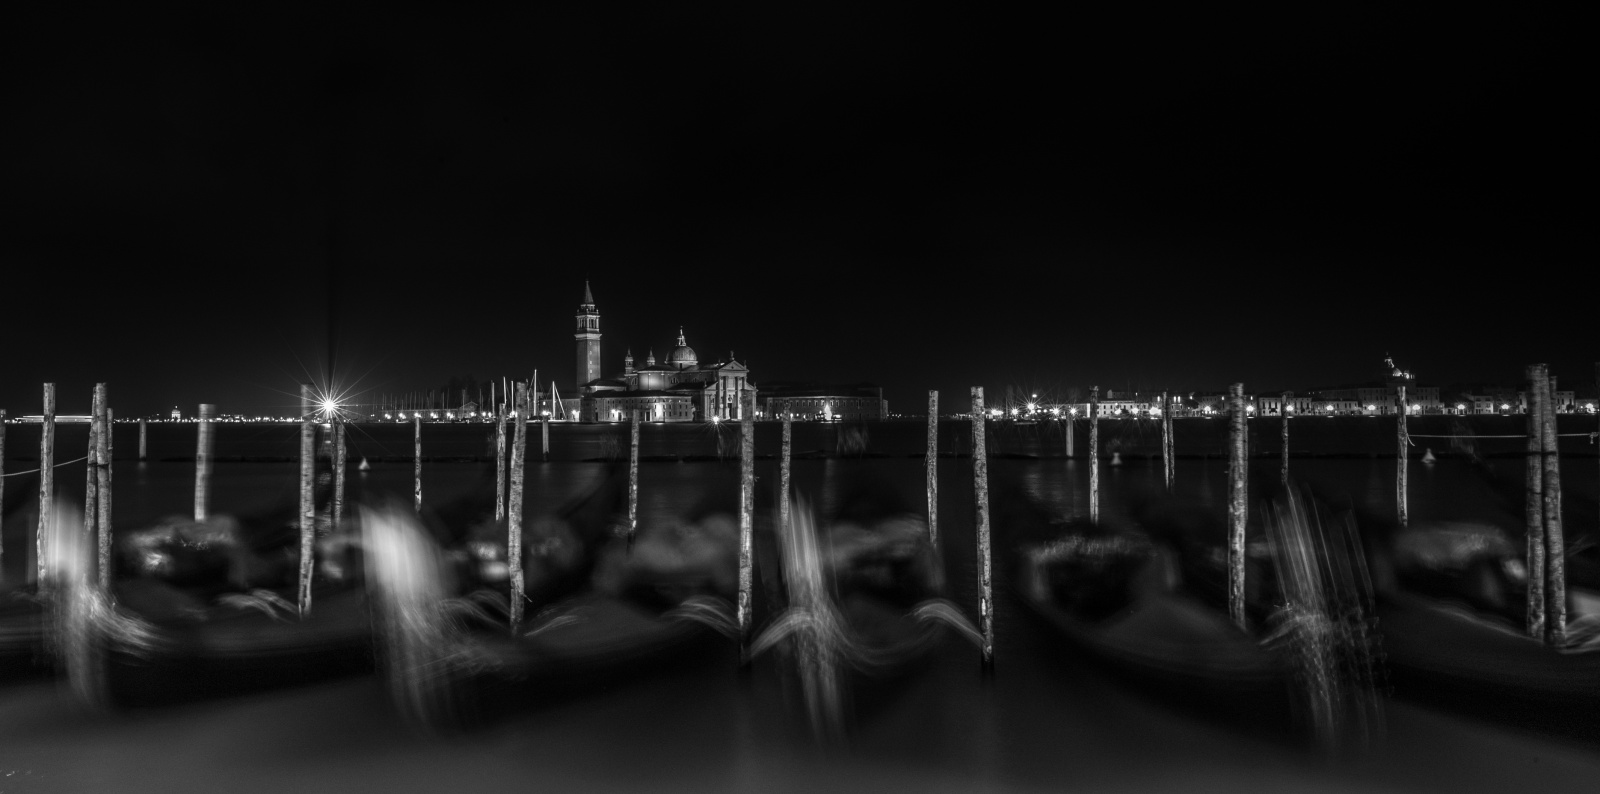 Venezia: visioni e illusioni (notte) 